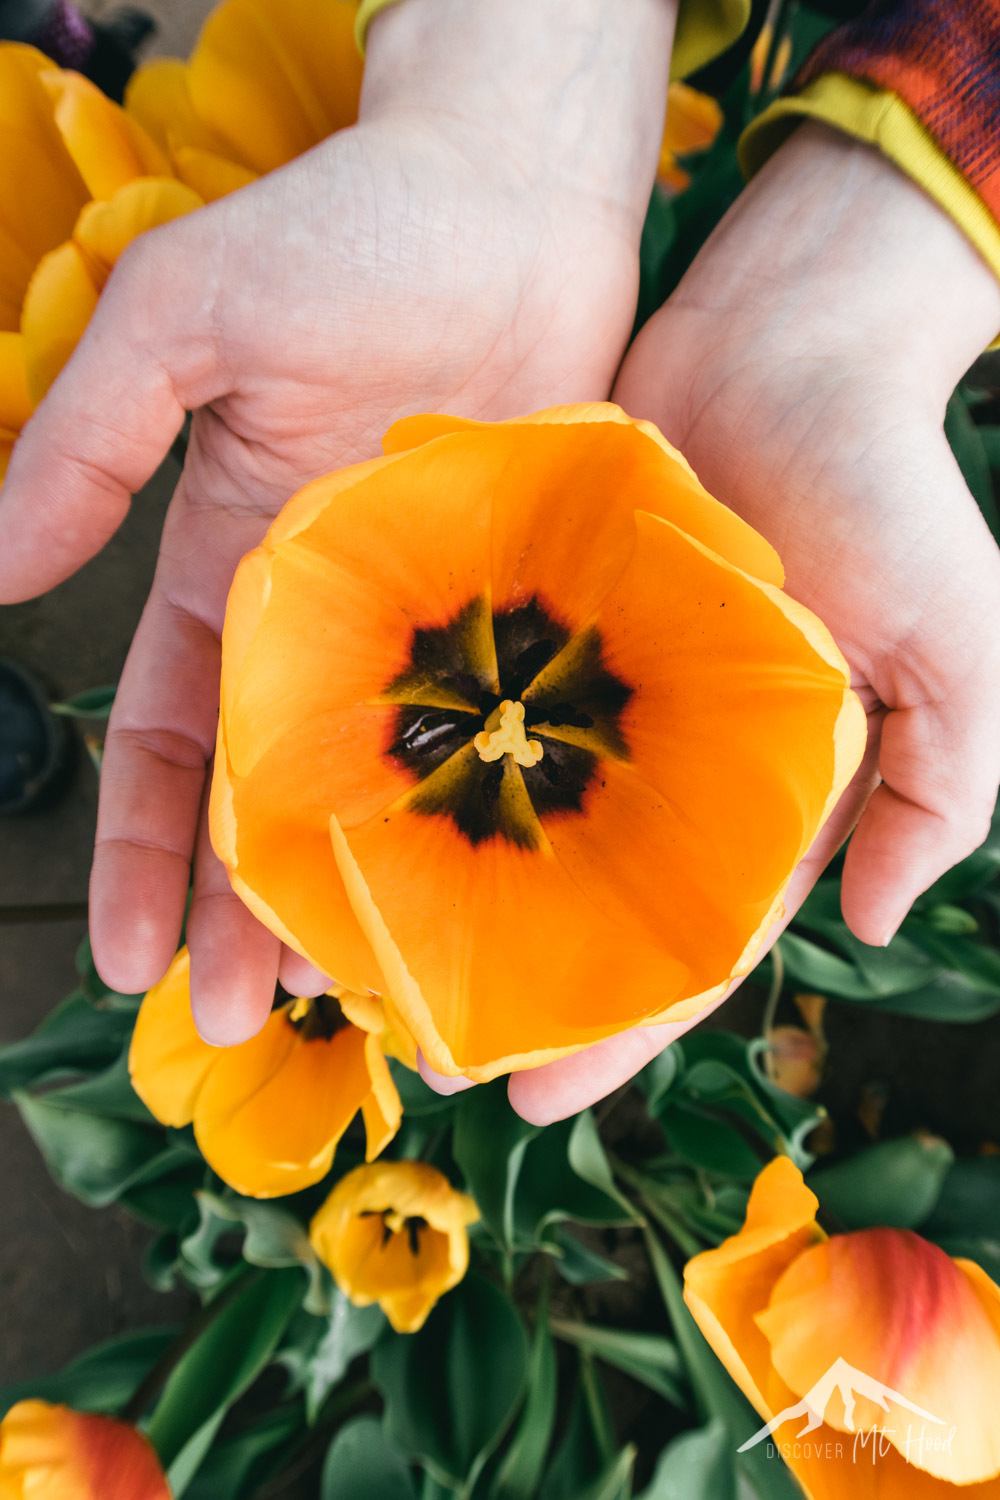 Girls hand holding an orange tulip